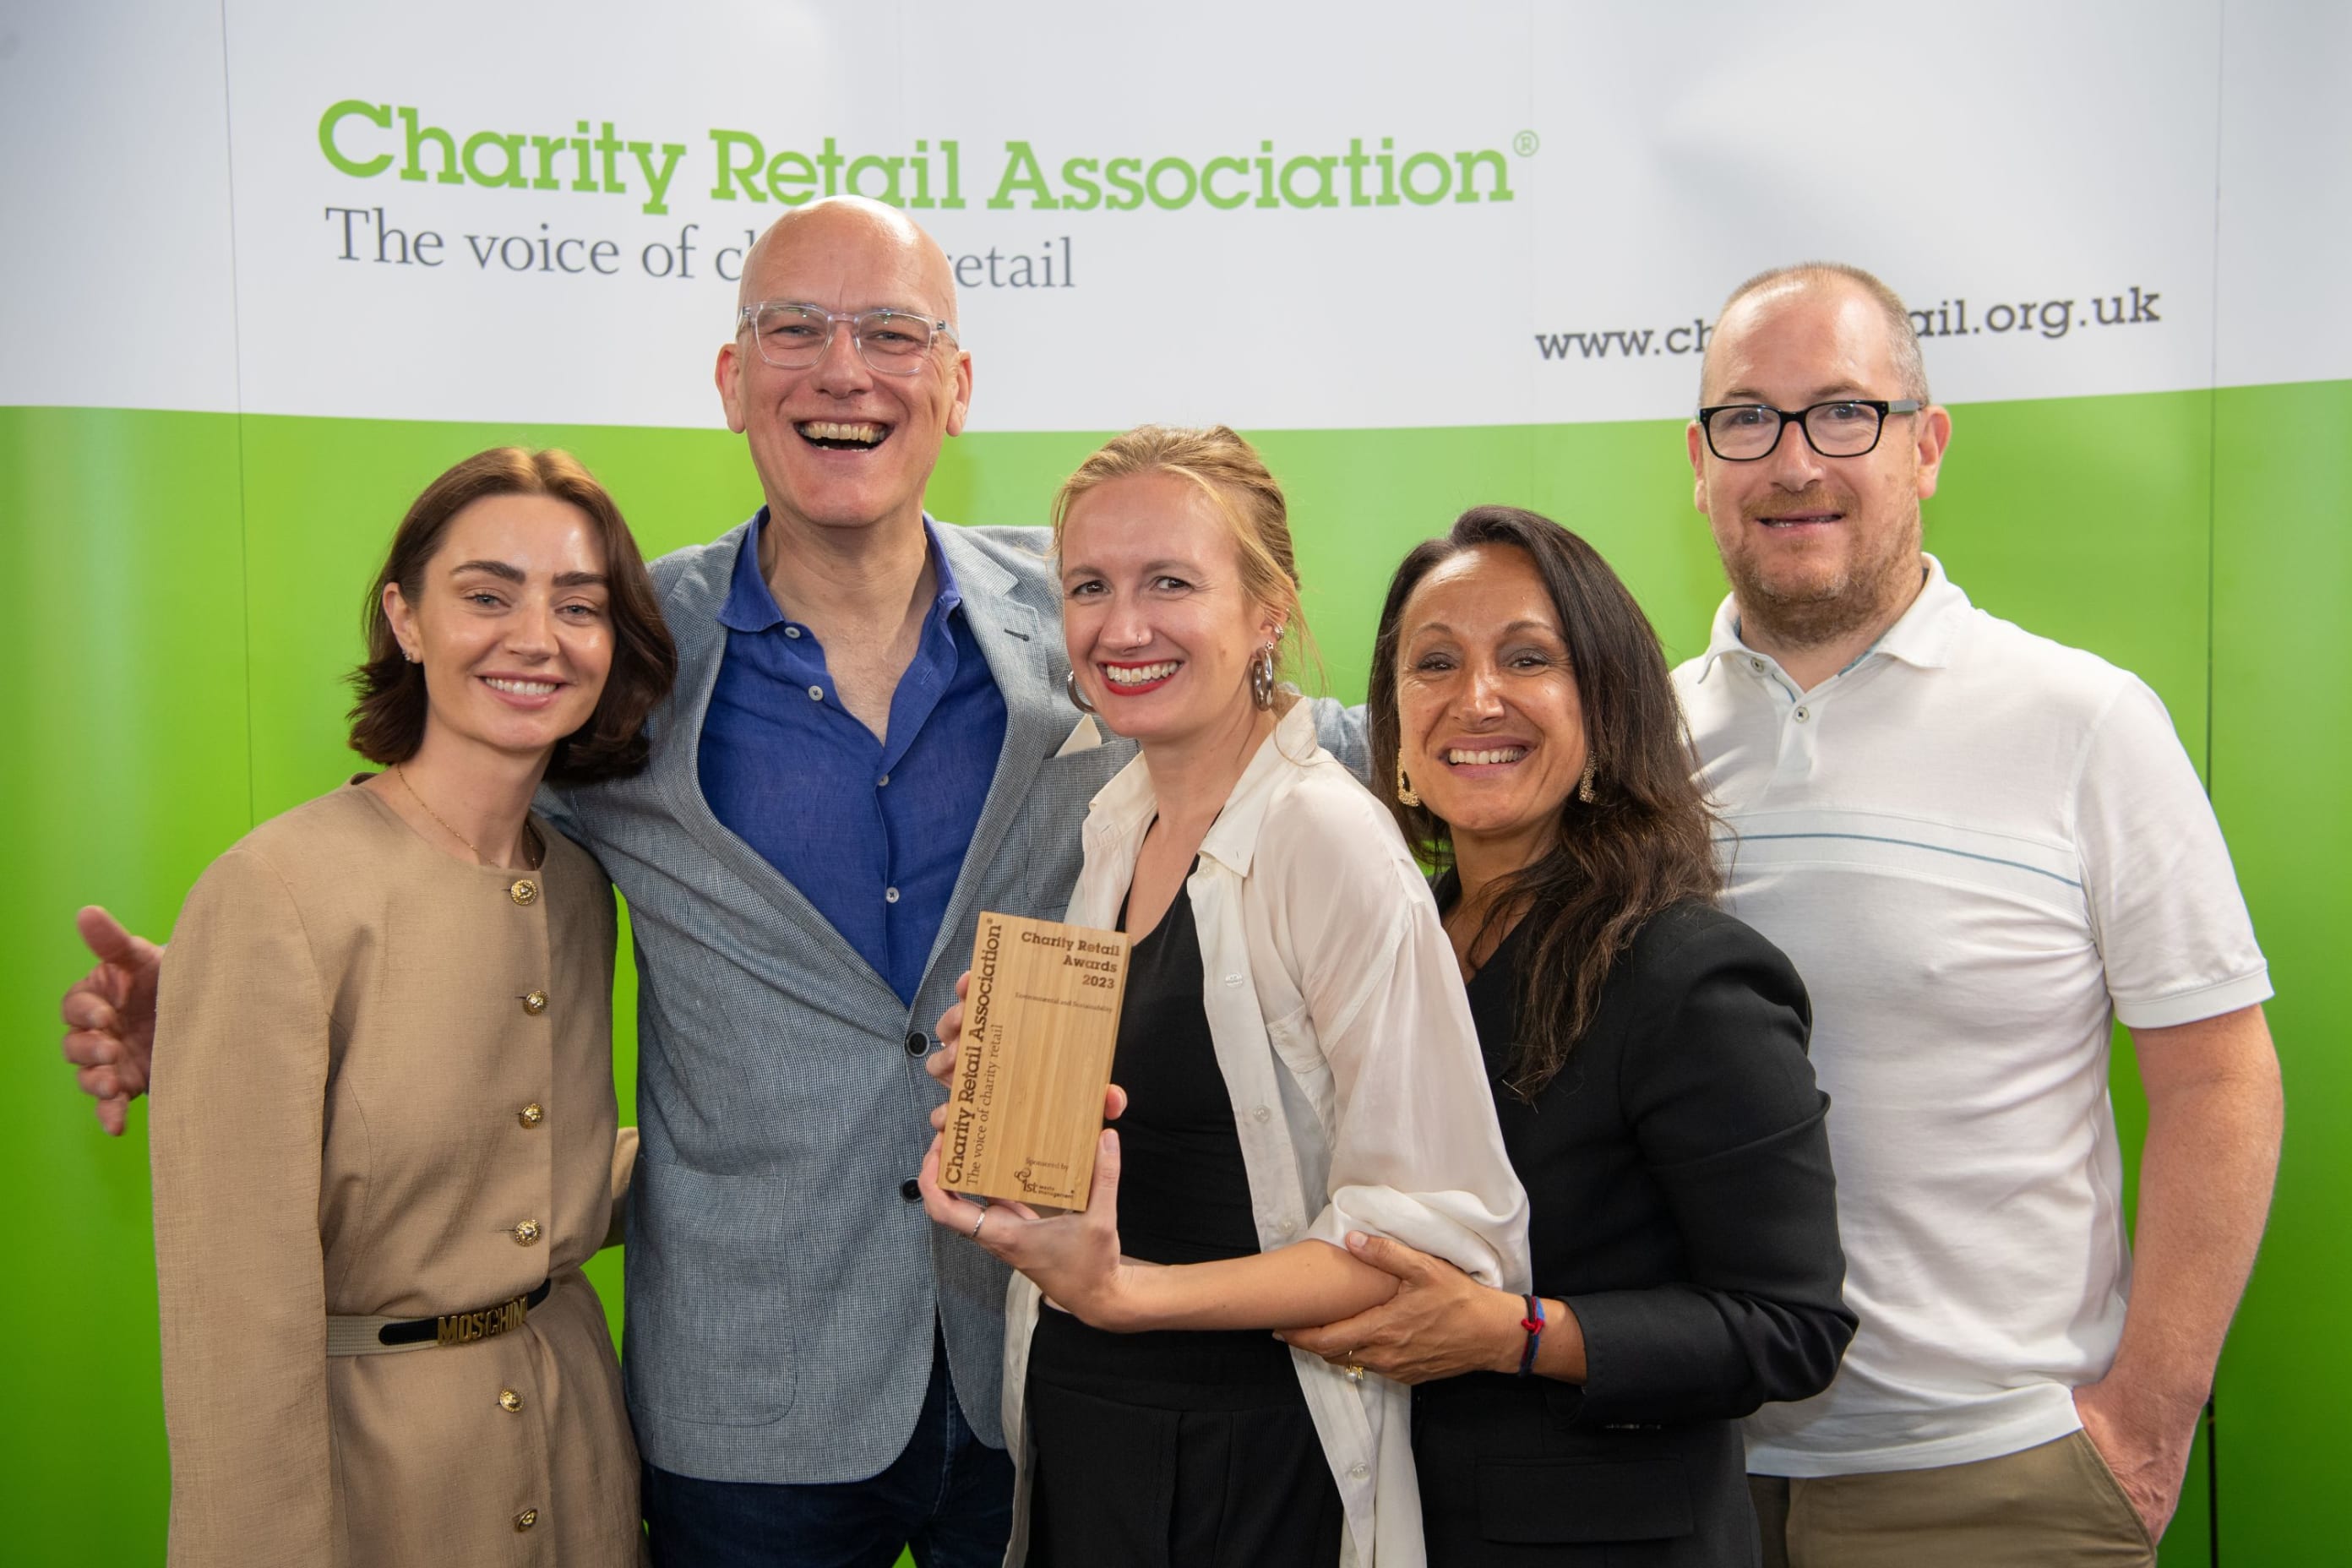 3 women and 2 men stood smiling, holding an award